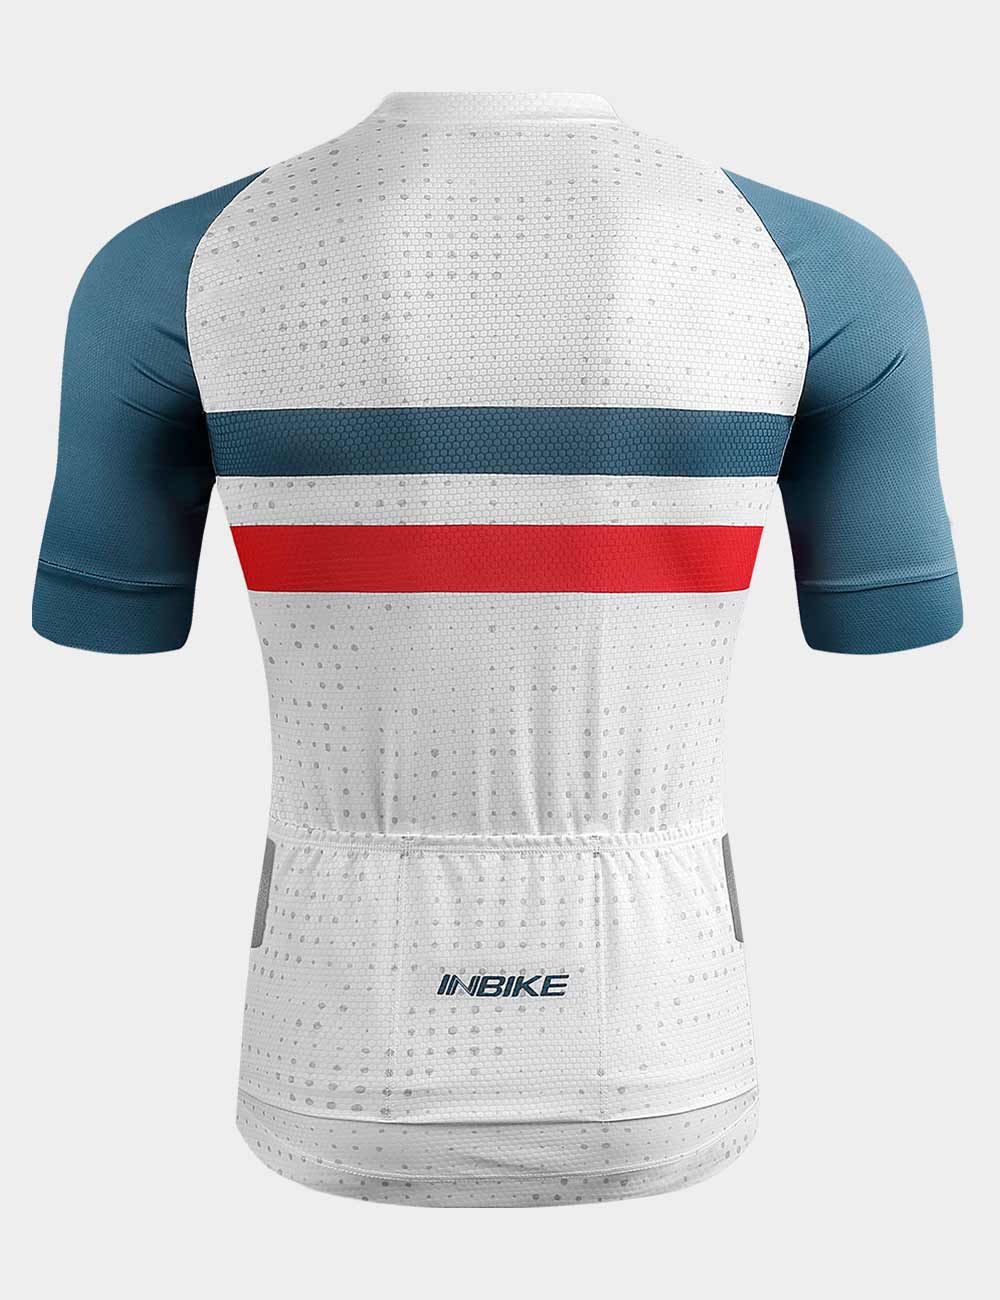 IA401SJ 9C5 INBIKE Men's Summer Breathable Cycling Short Sleeve Jersey 